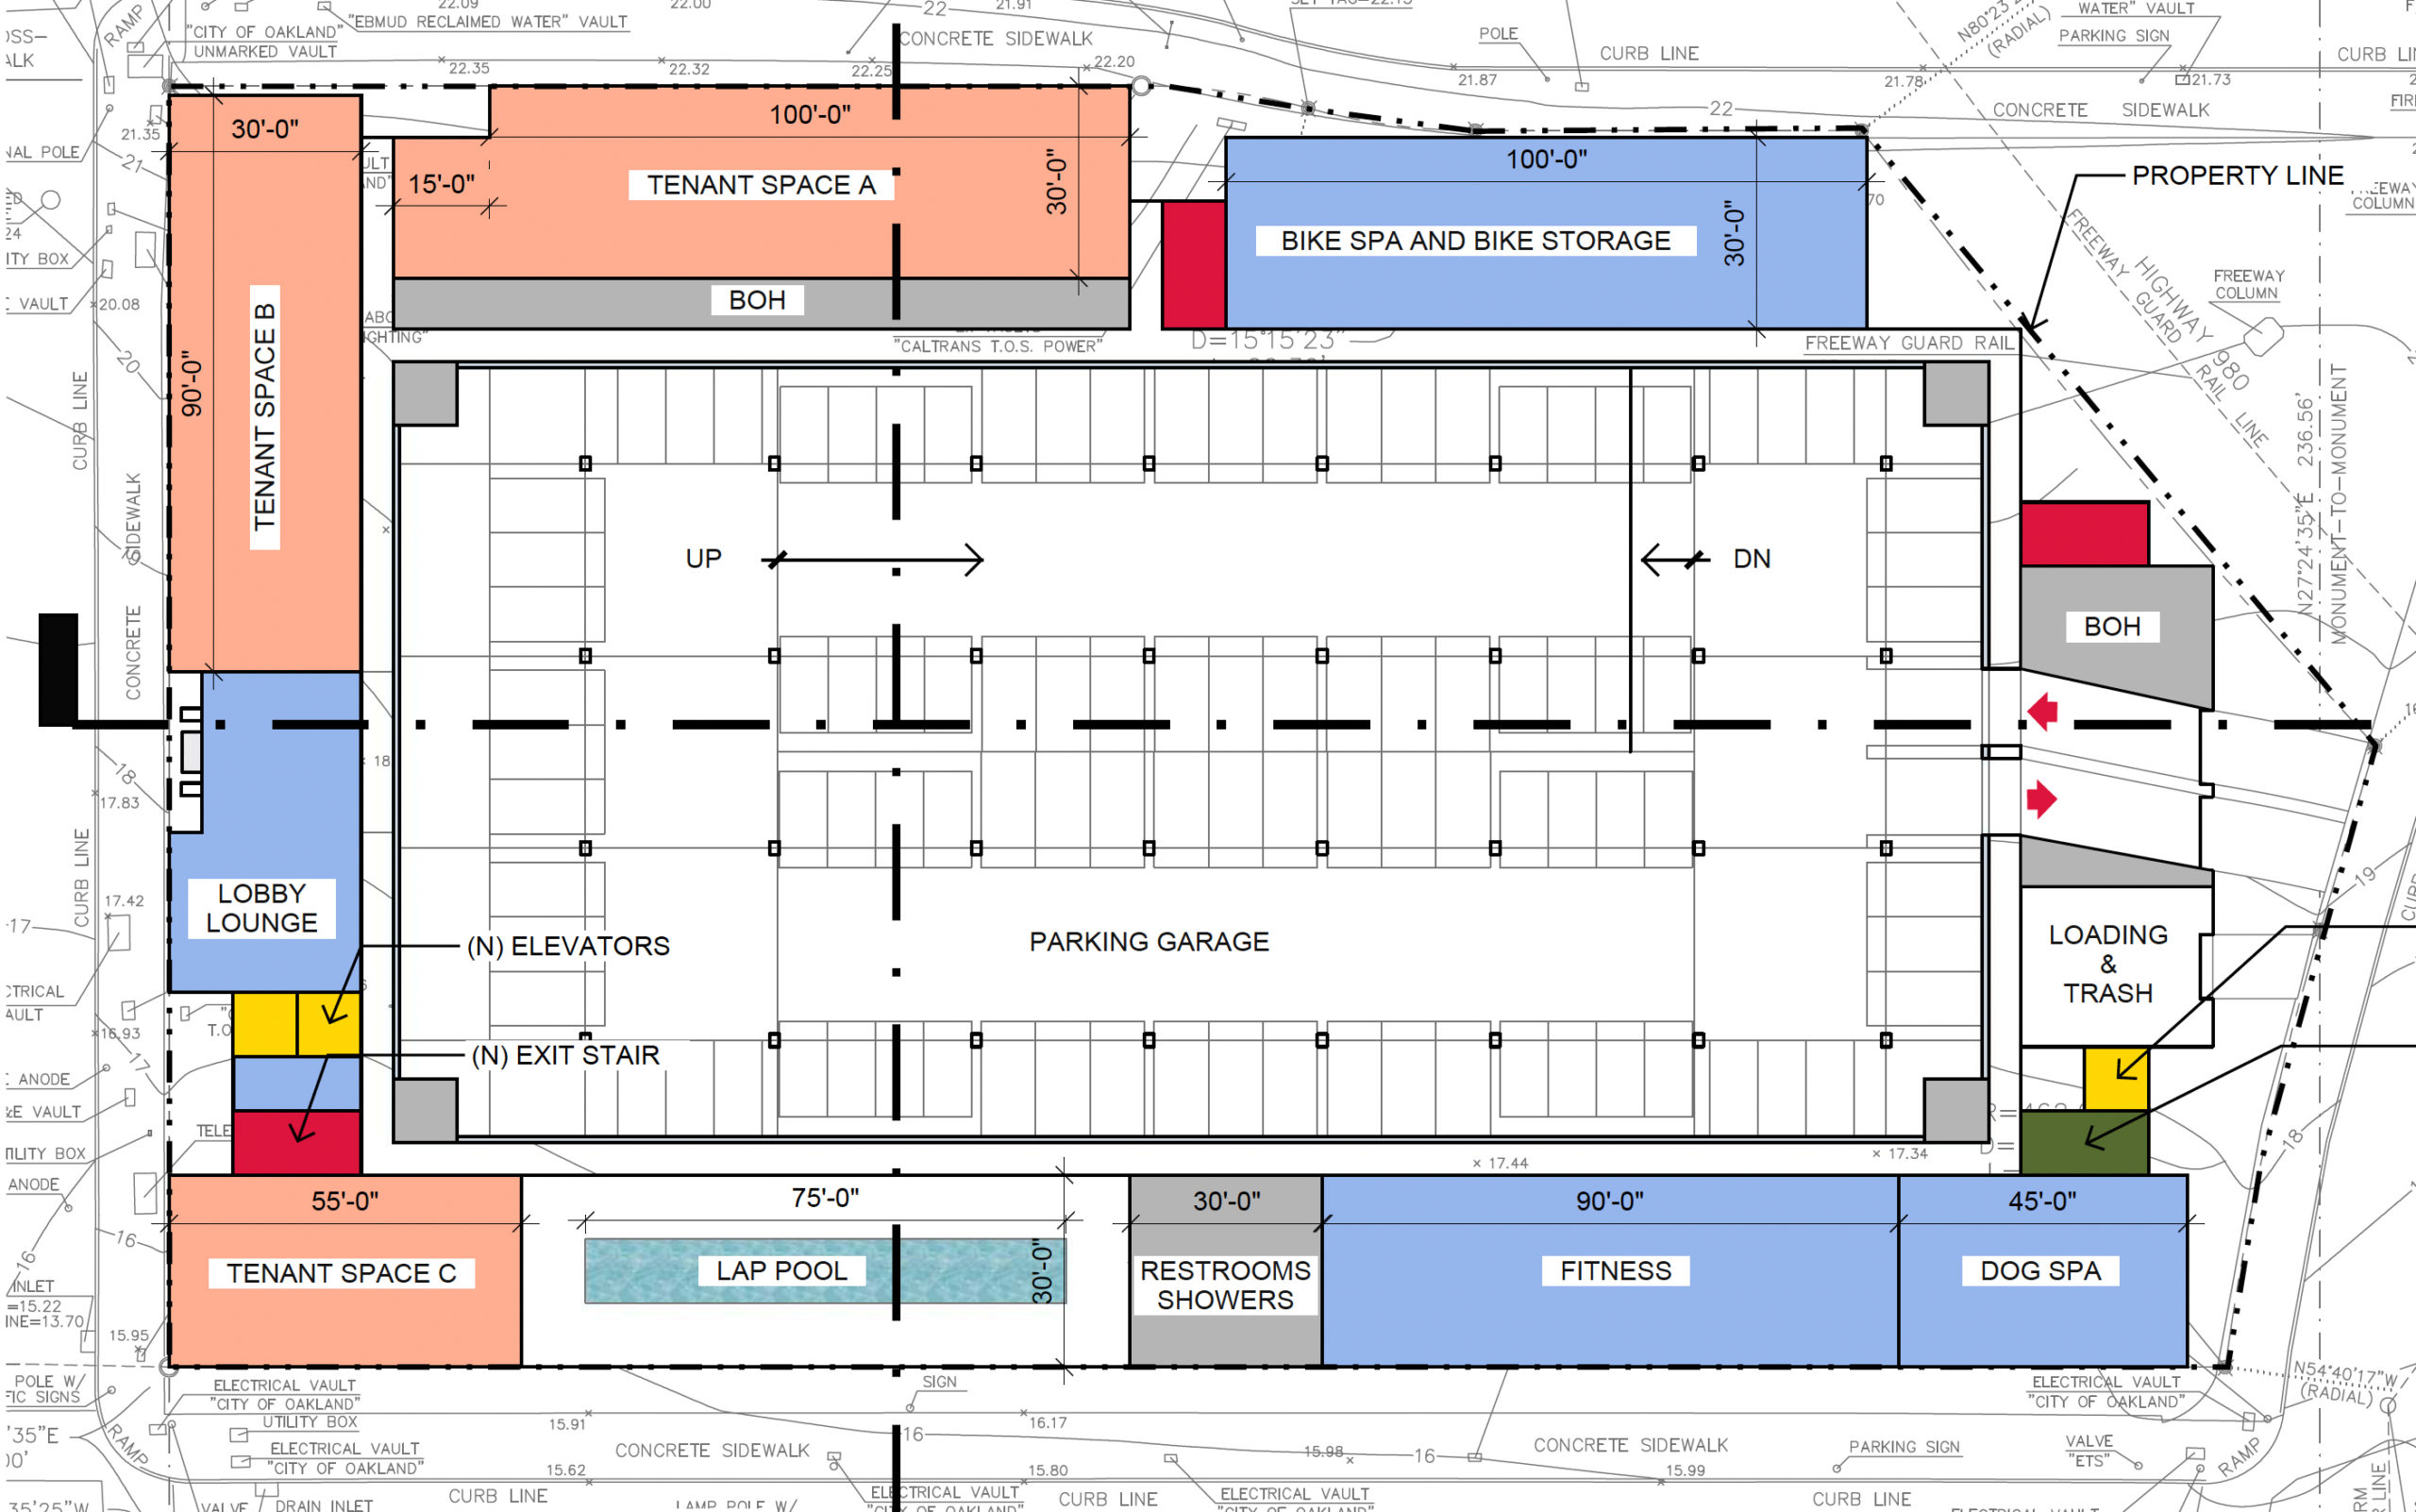 600 Castro Street base zoning ground-level floor plan, illustration by LCA Architects